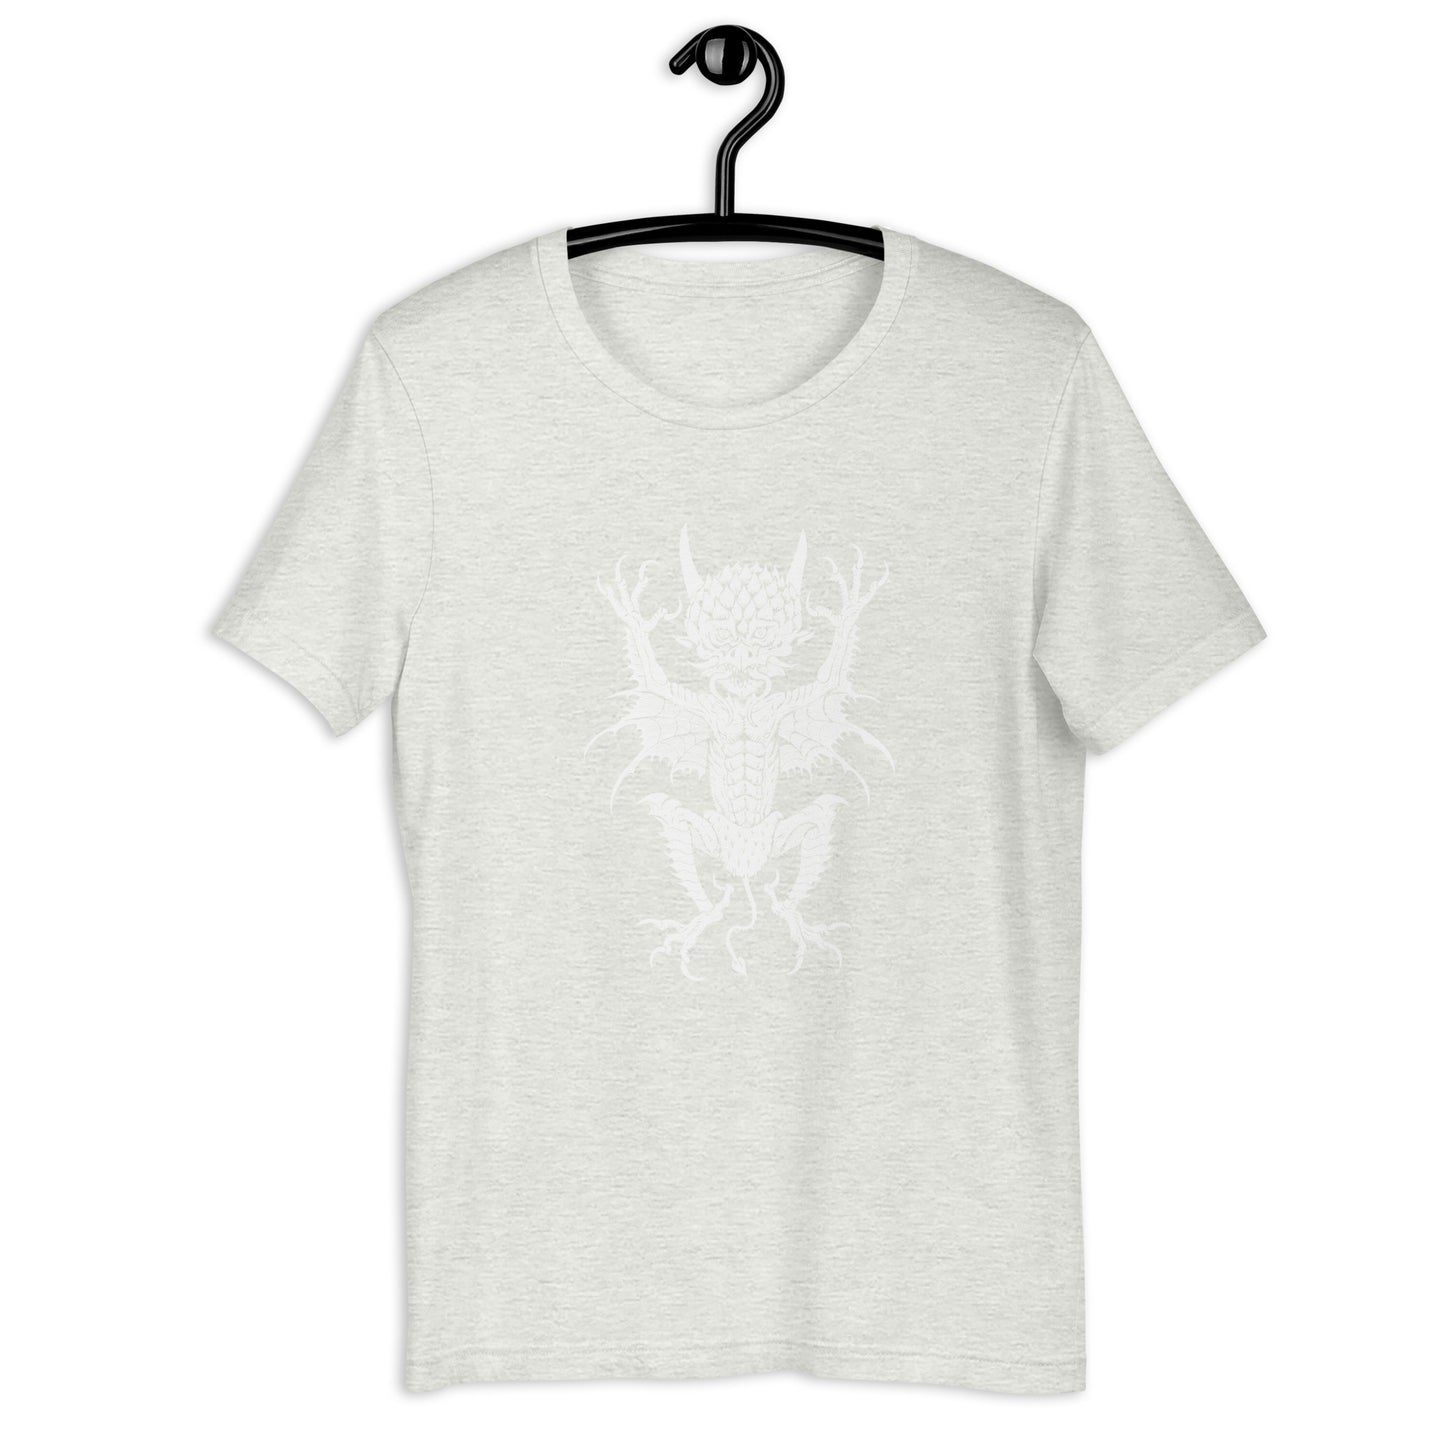 Little Demon - Unisex t-shirt